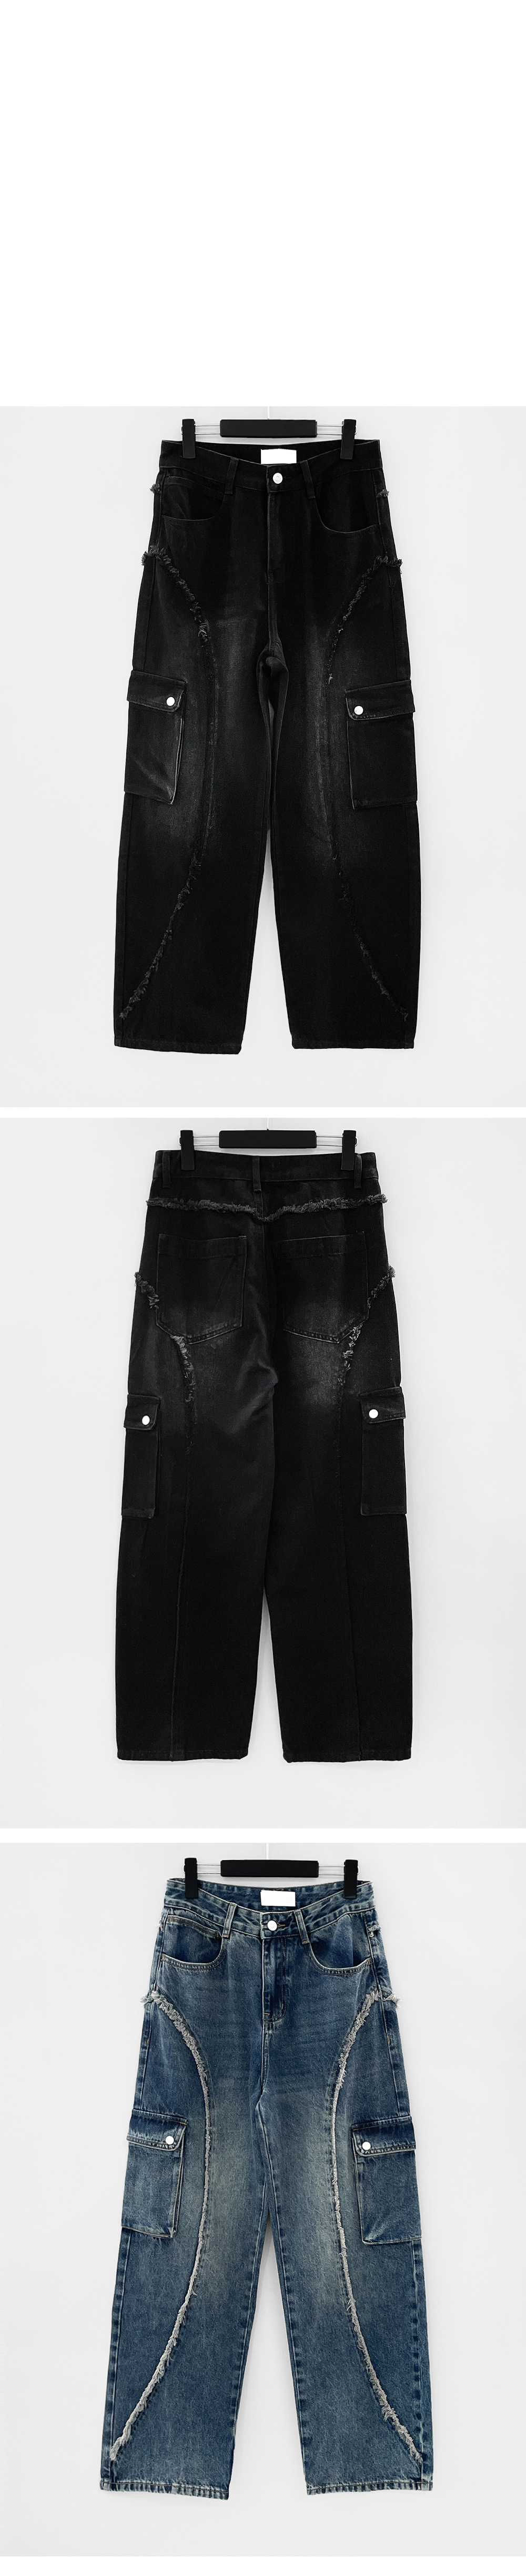 suspenders skirt/pants charcoal color image-S1L12